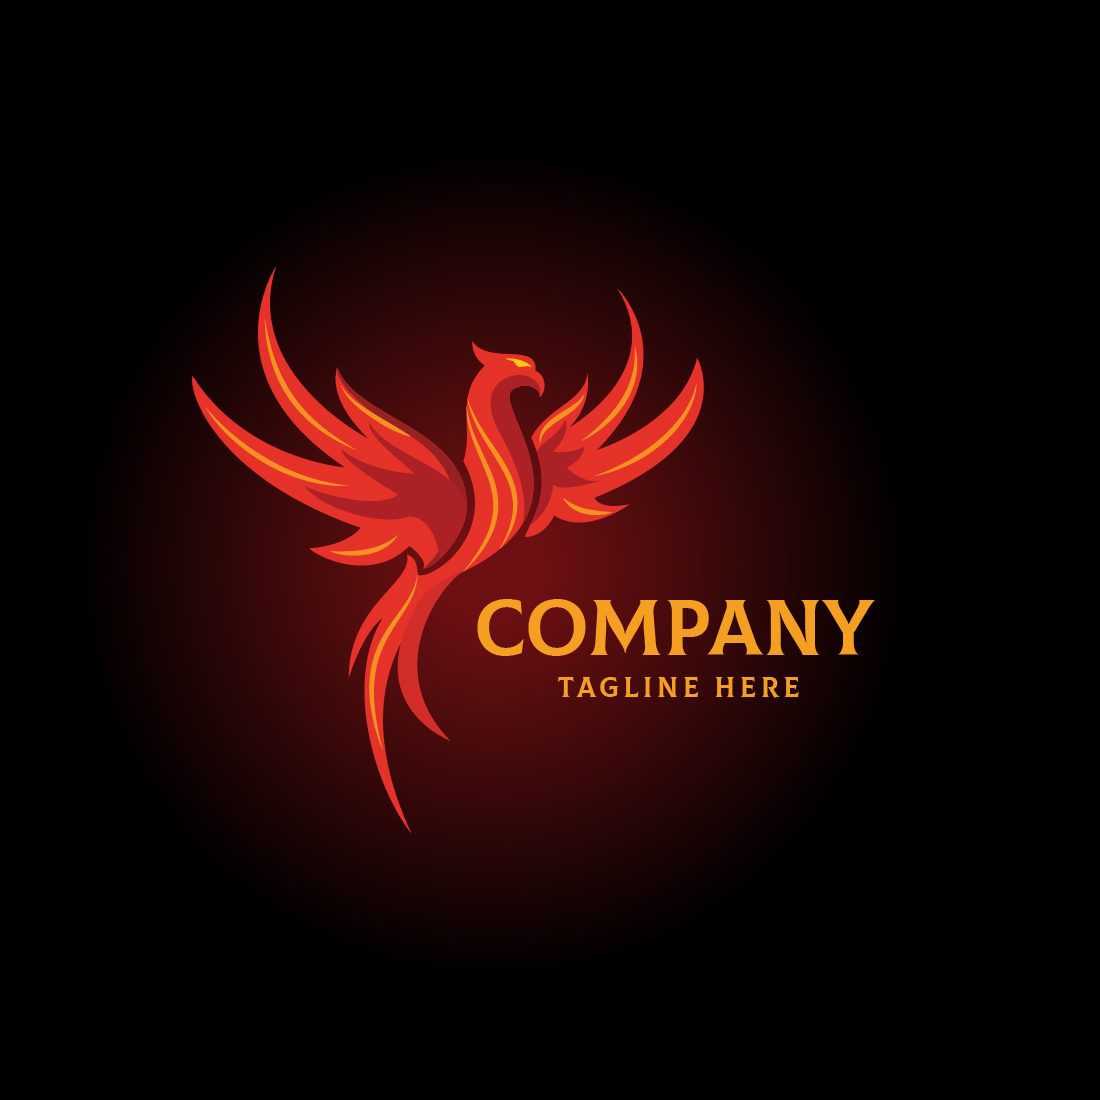 Red bird logo on a black background.